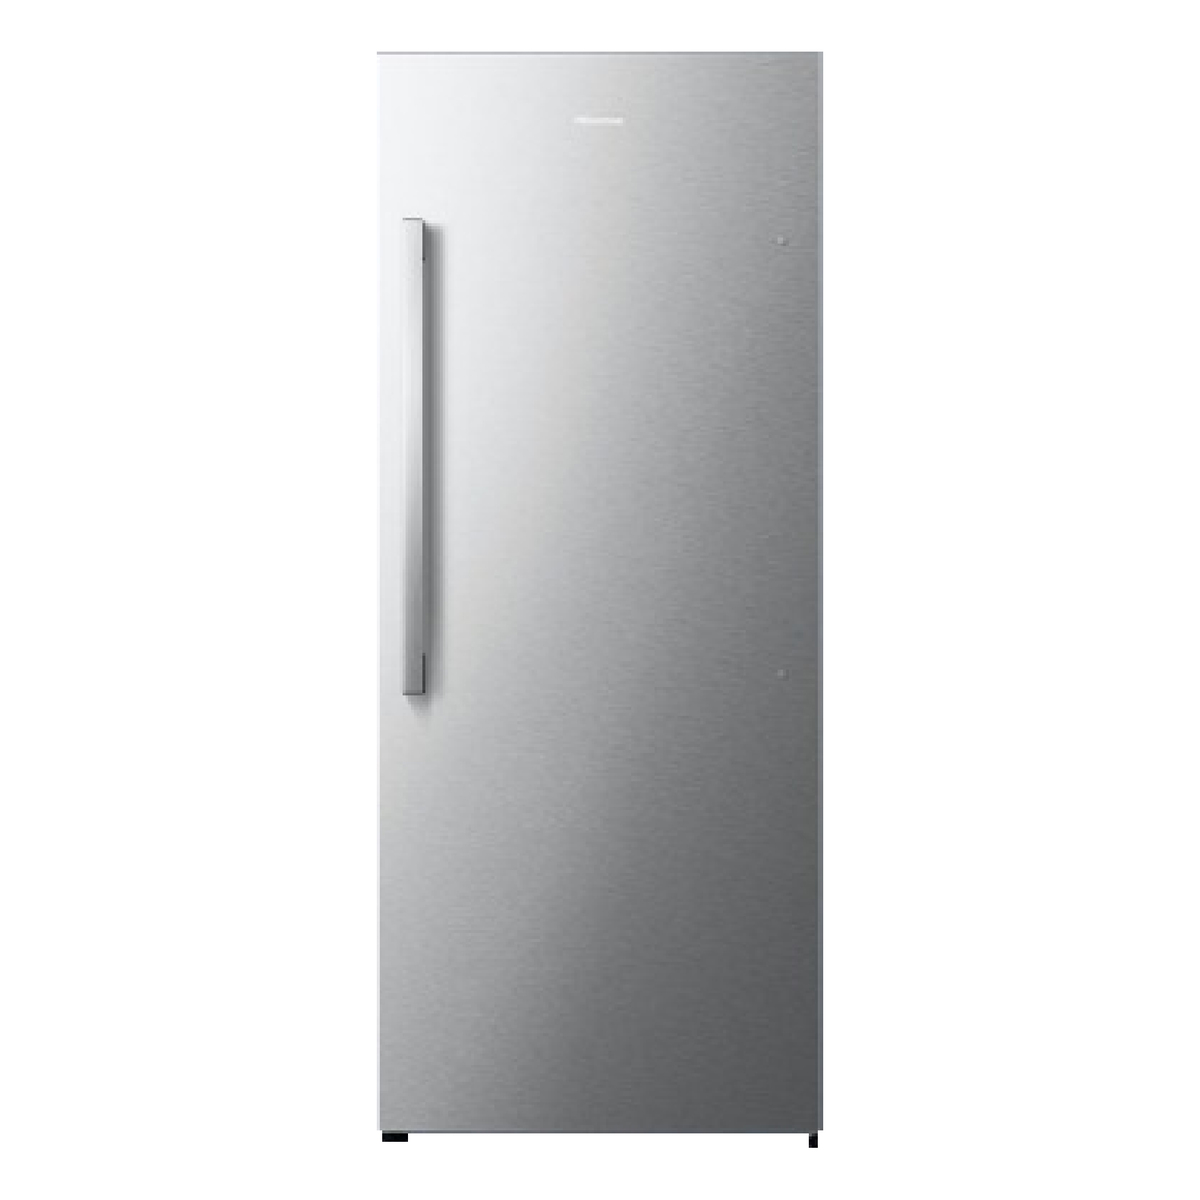 Hisense Upright Freezer FV509N4ASU 509L